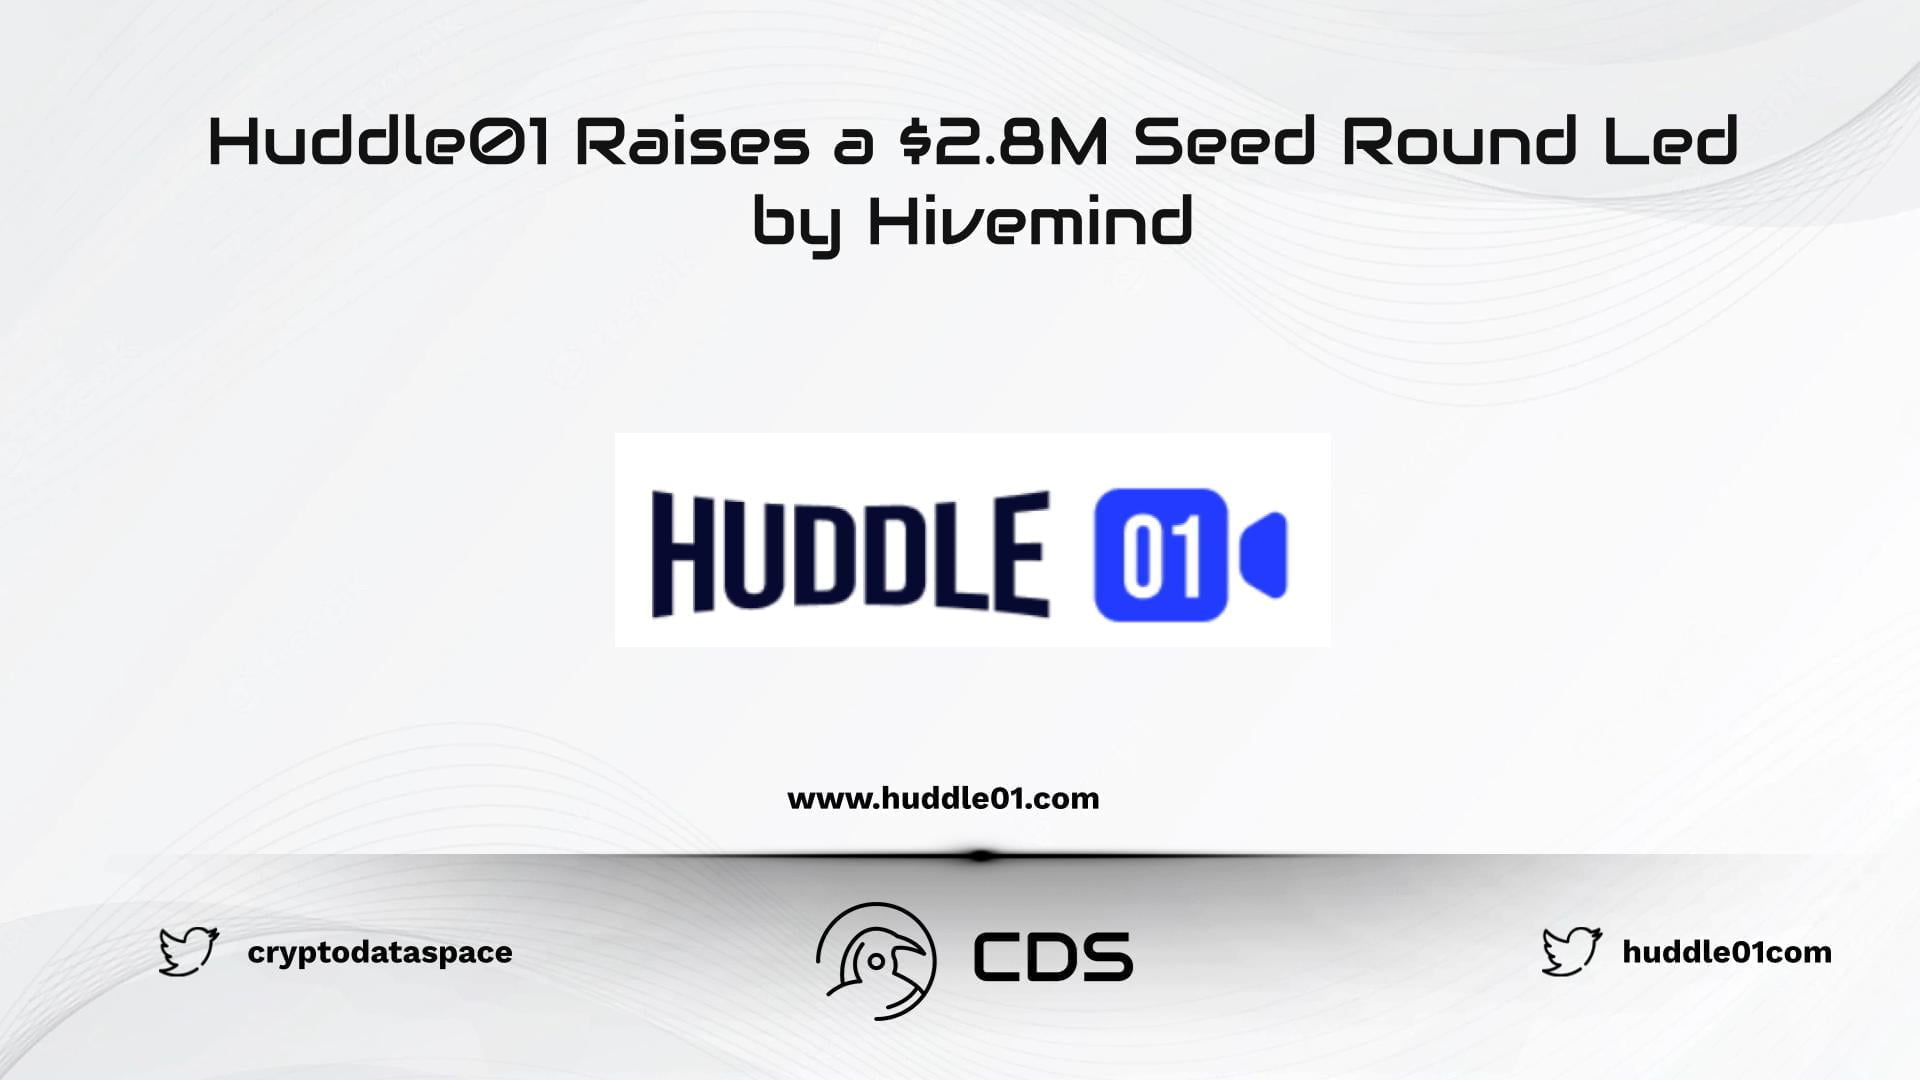 Huddle01 Raises a $2.8M Seed Round Led by Hivemind